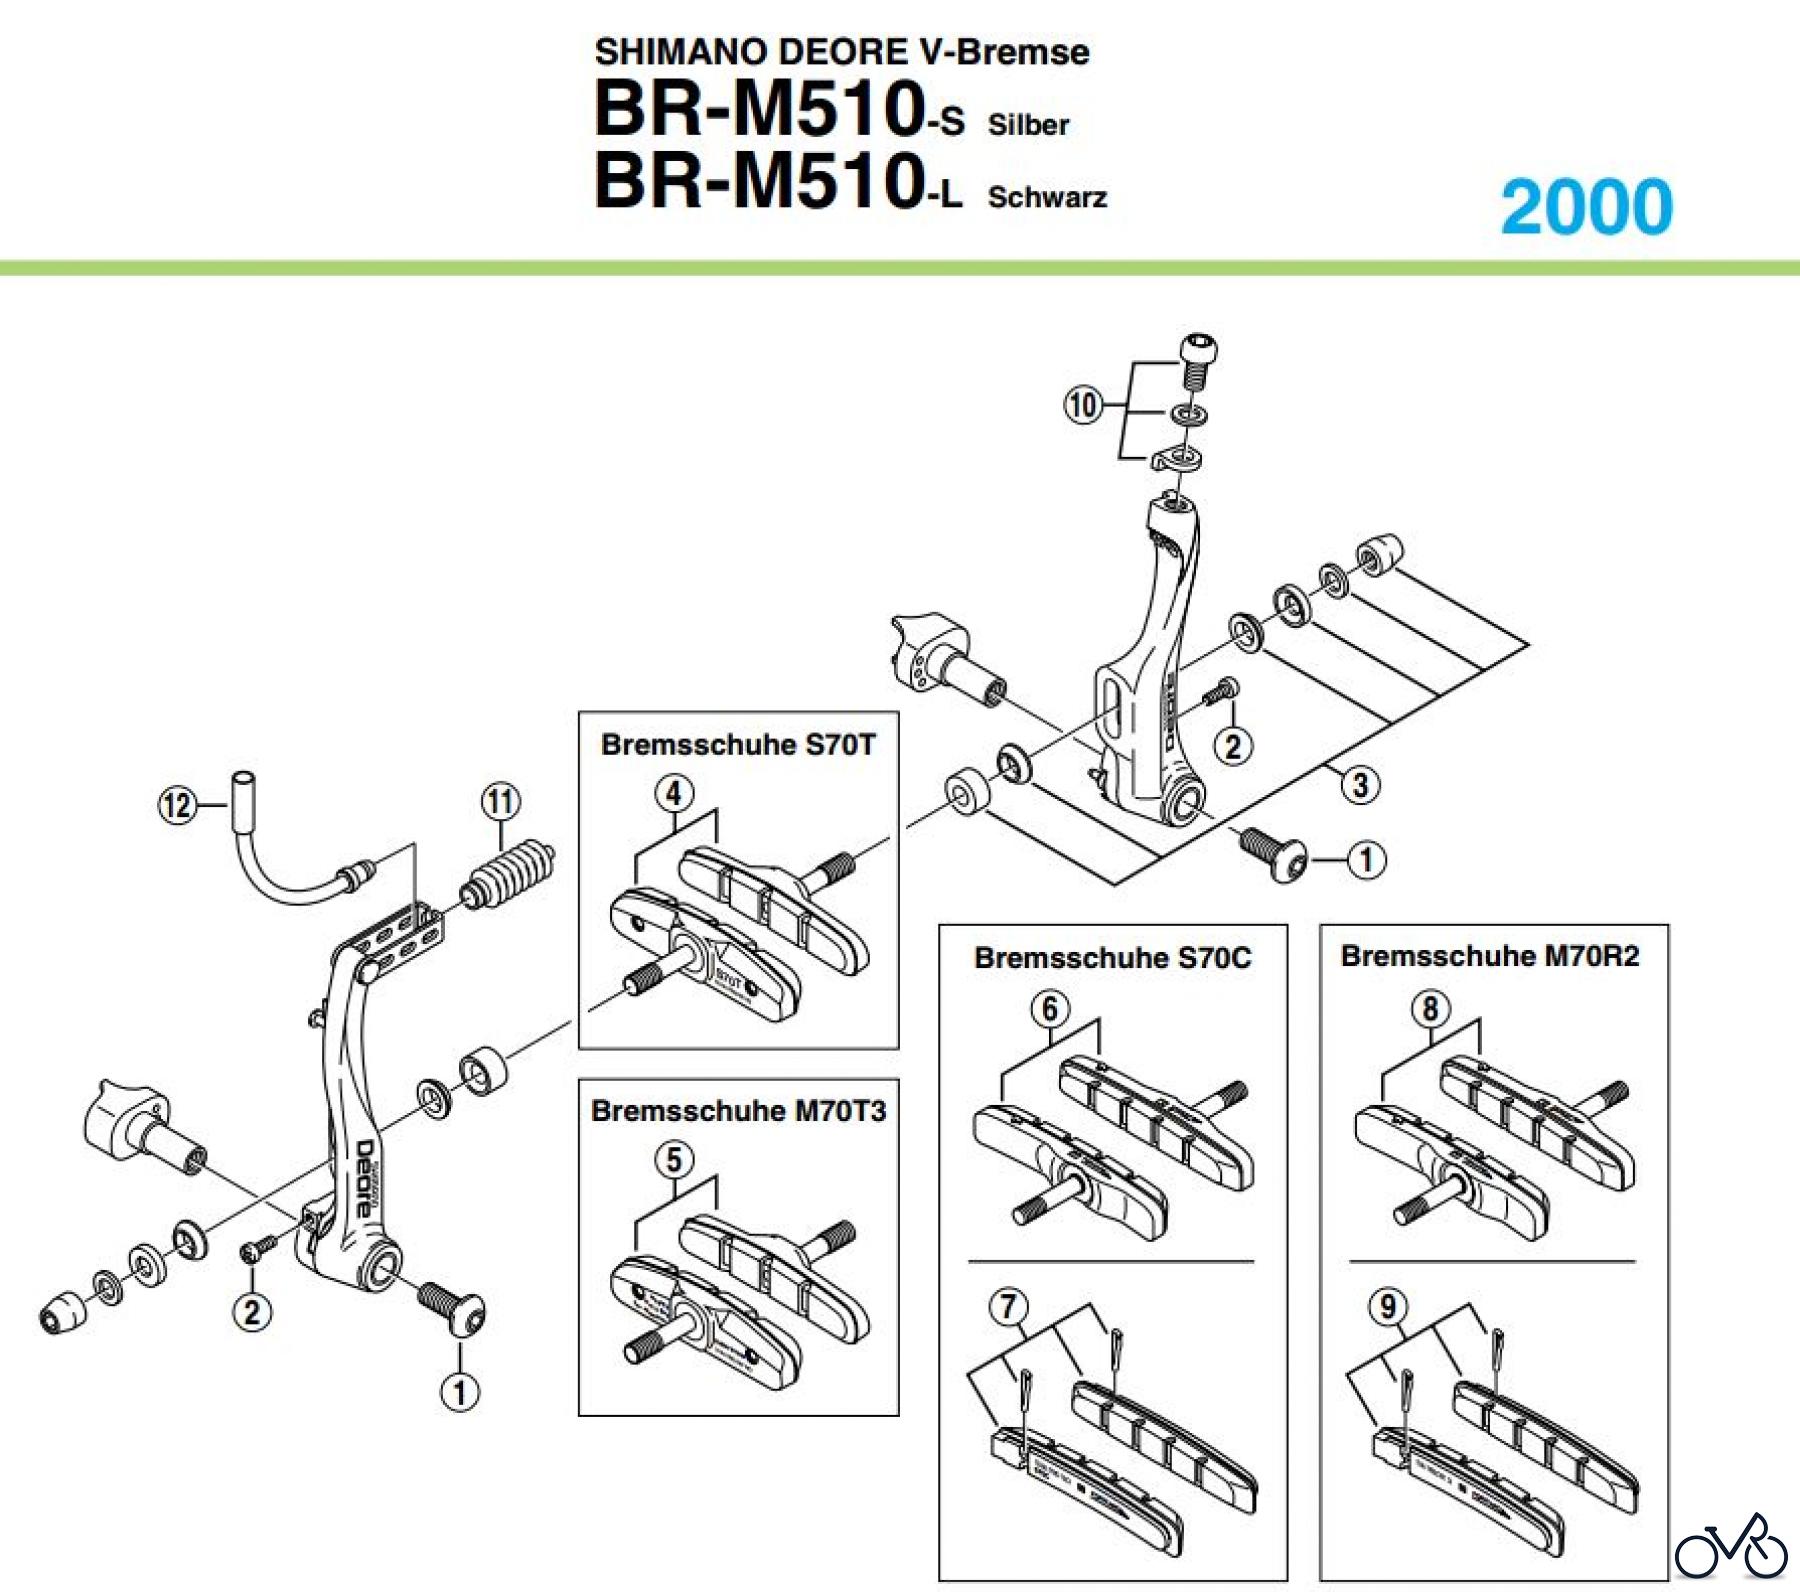  Shimano BR Brake - Bremse BR-M510-2000 SHIMANO DEORE V-Bremse